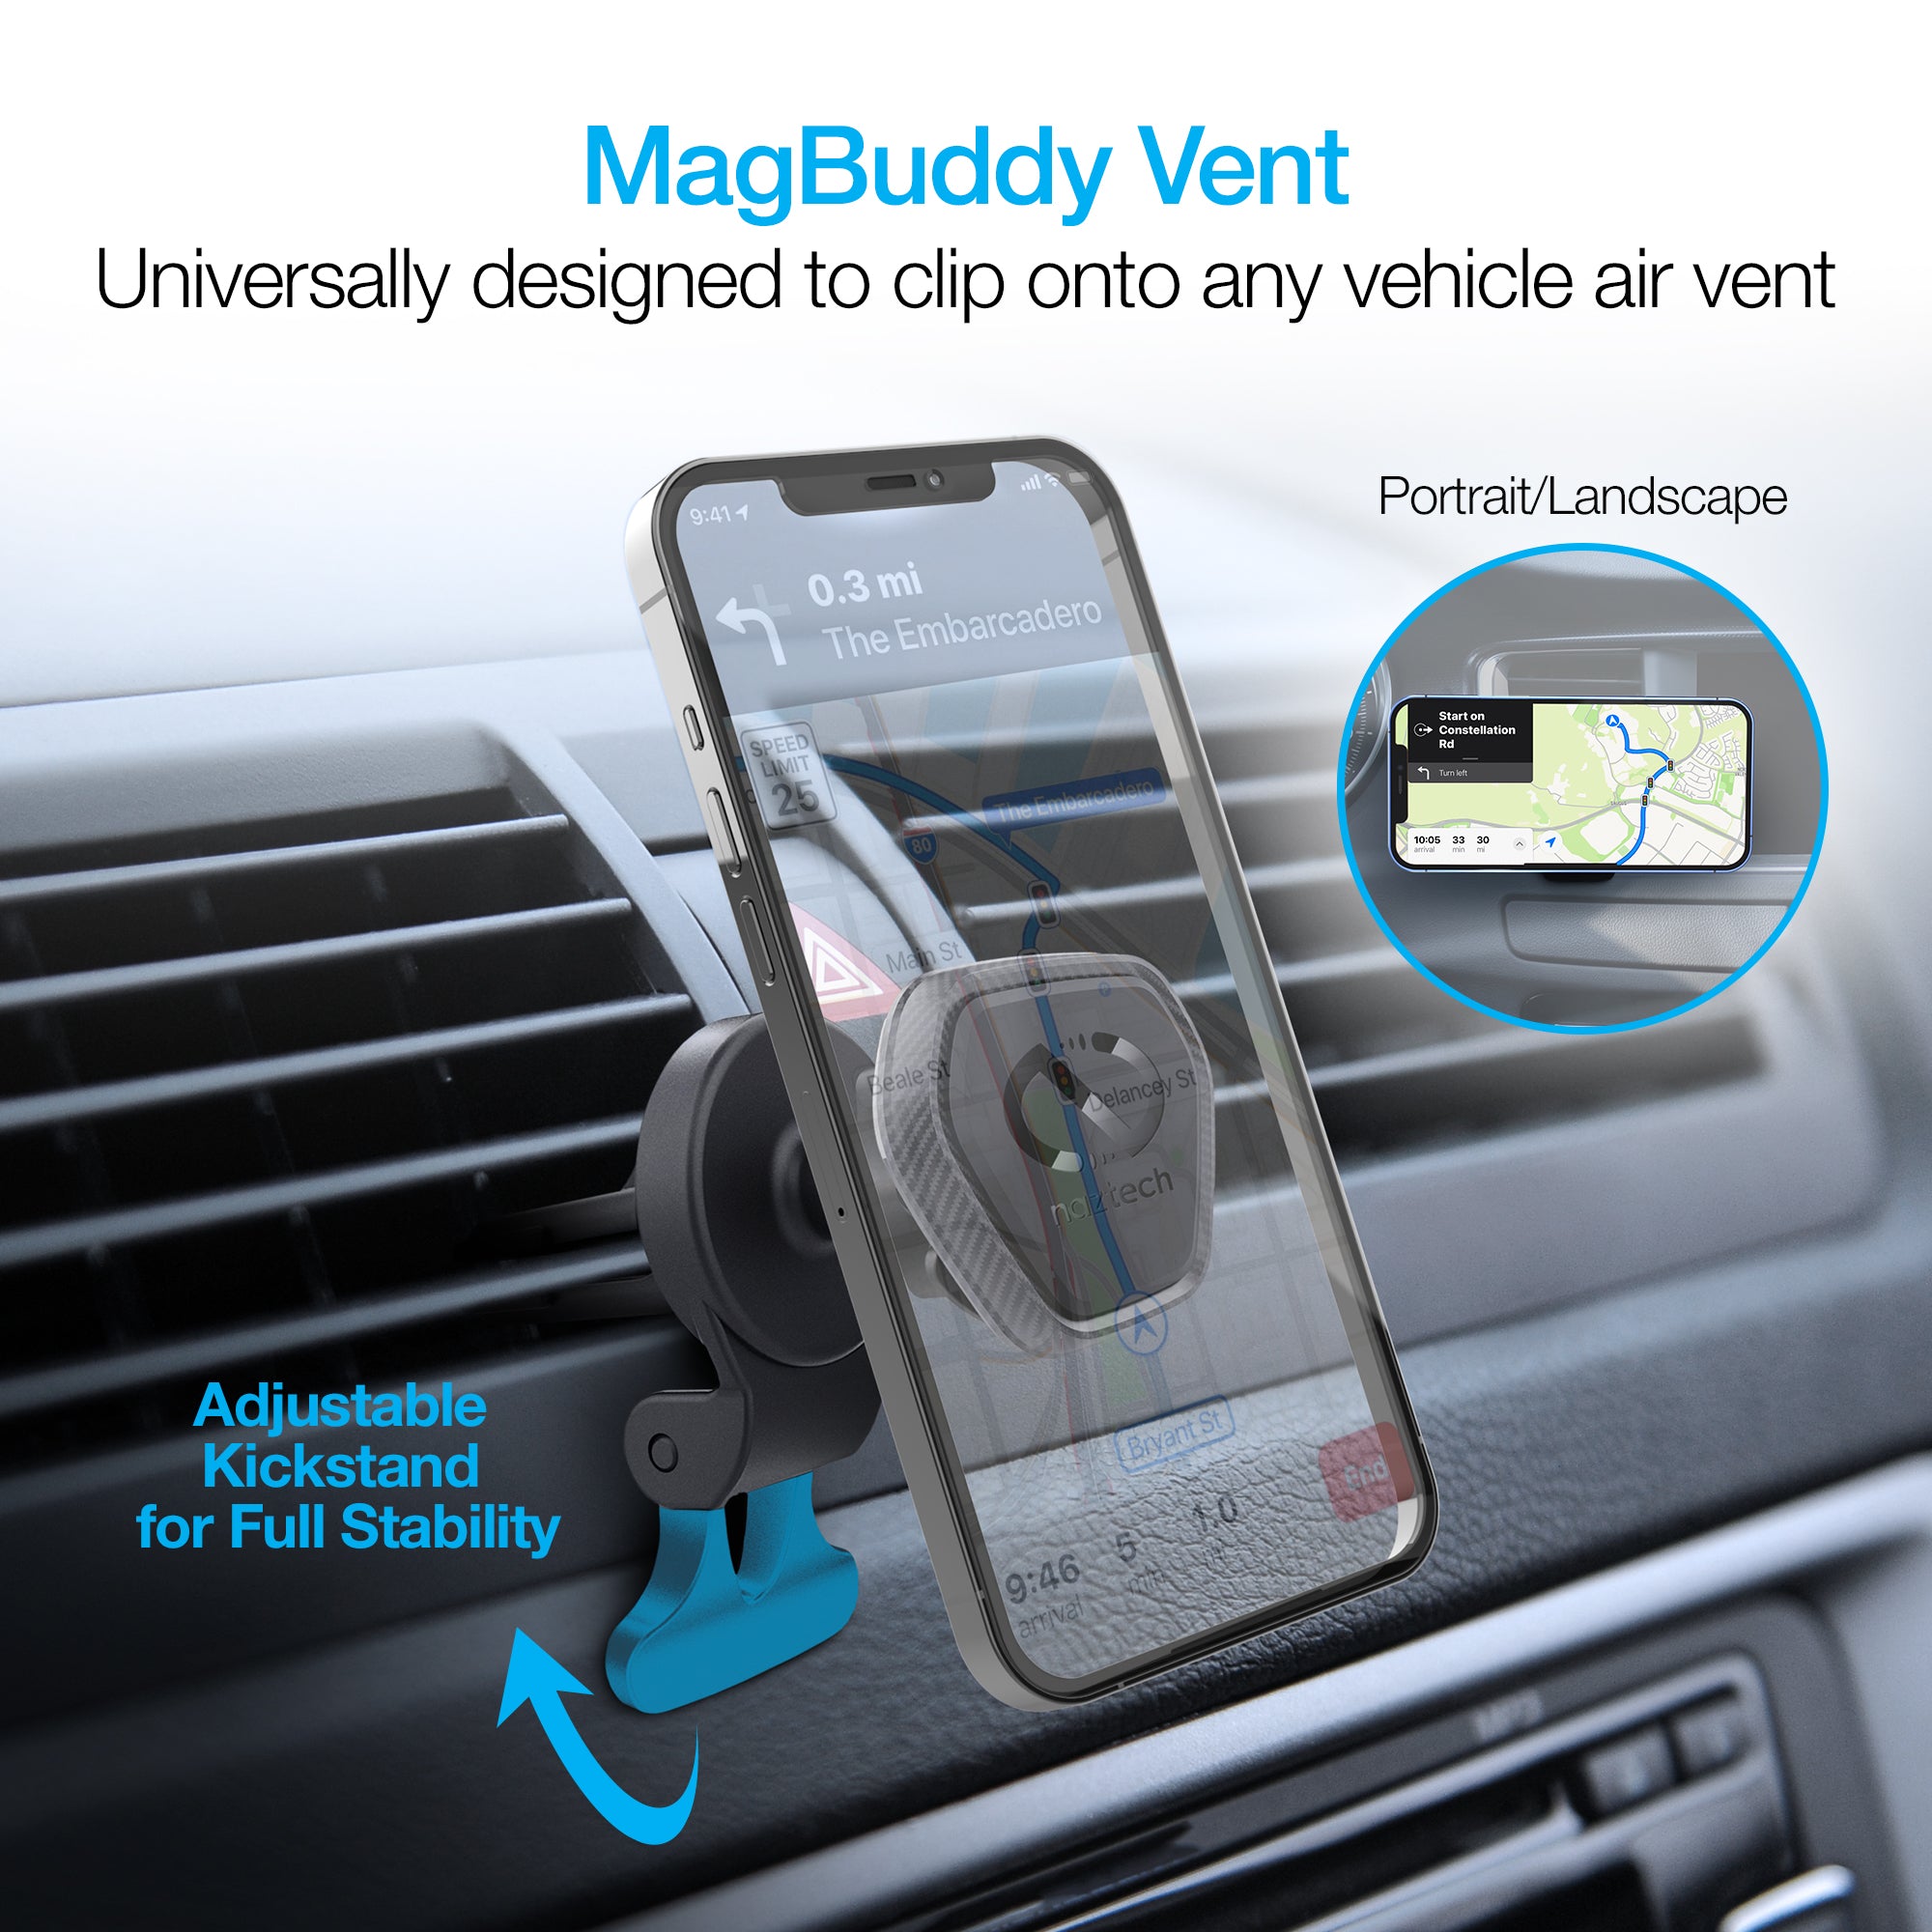 Aukey HD-C5 Magnetic Air Vent Car Holder - acheter sur digitec